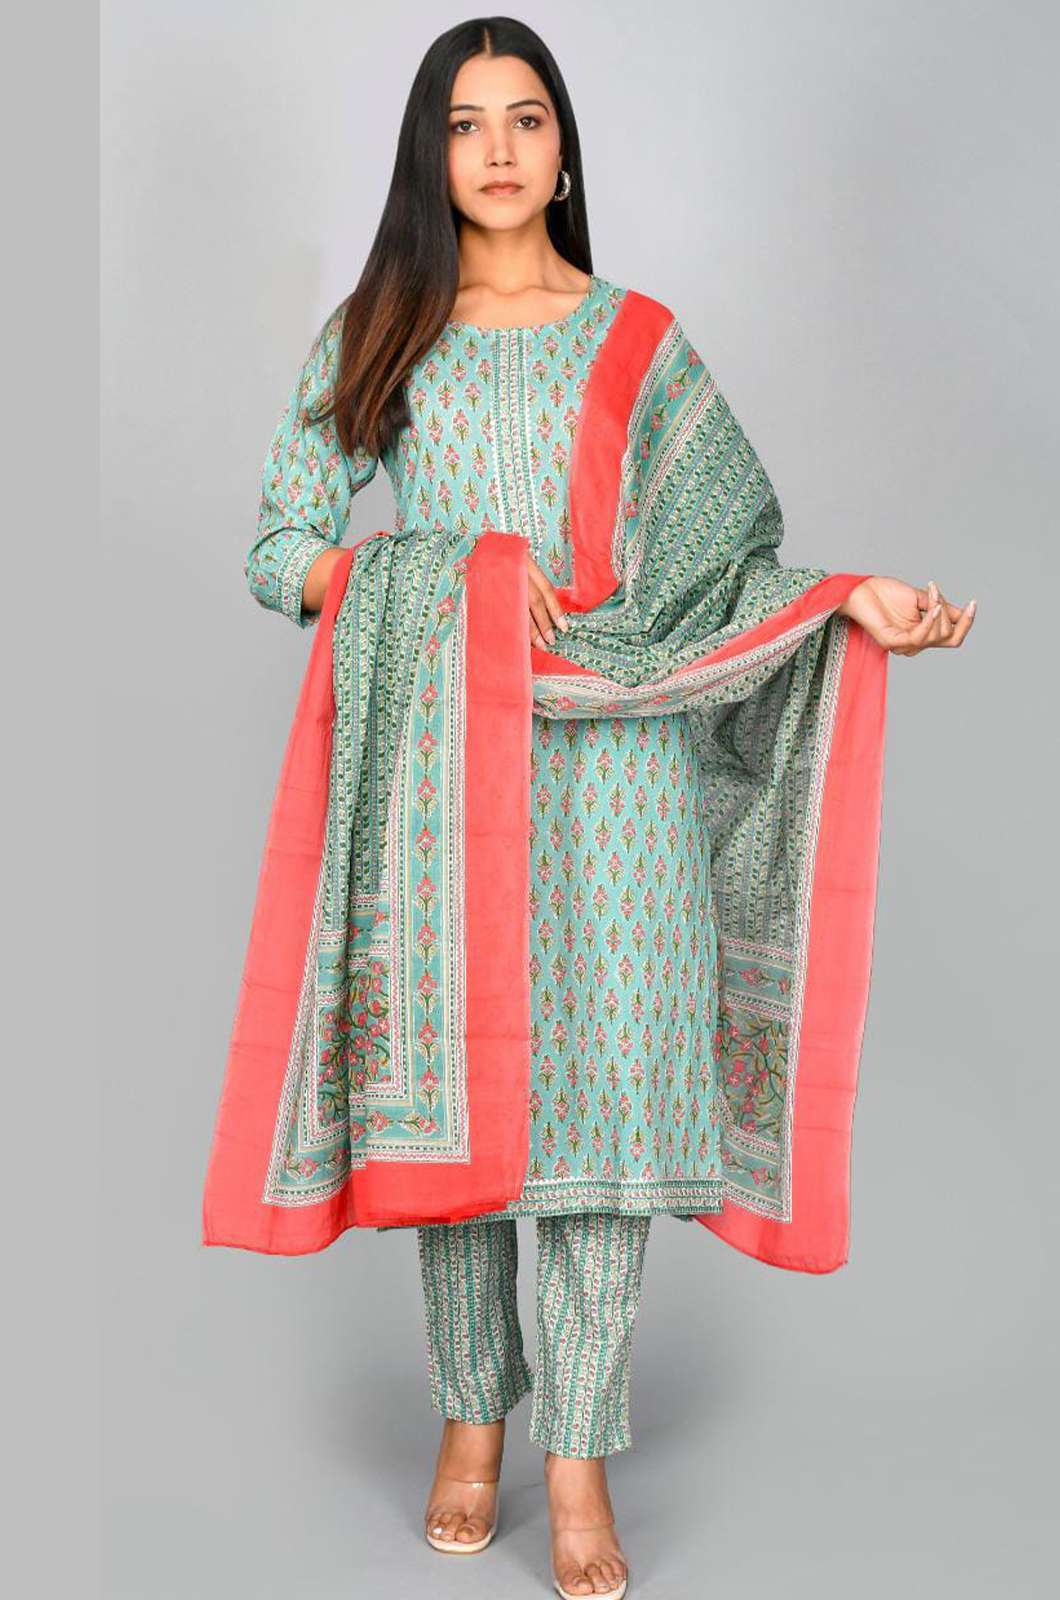 Shri Balaji Emporium 5499A Pure Cotton Readymade 3pcs stitched suits with Hand Block Print